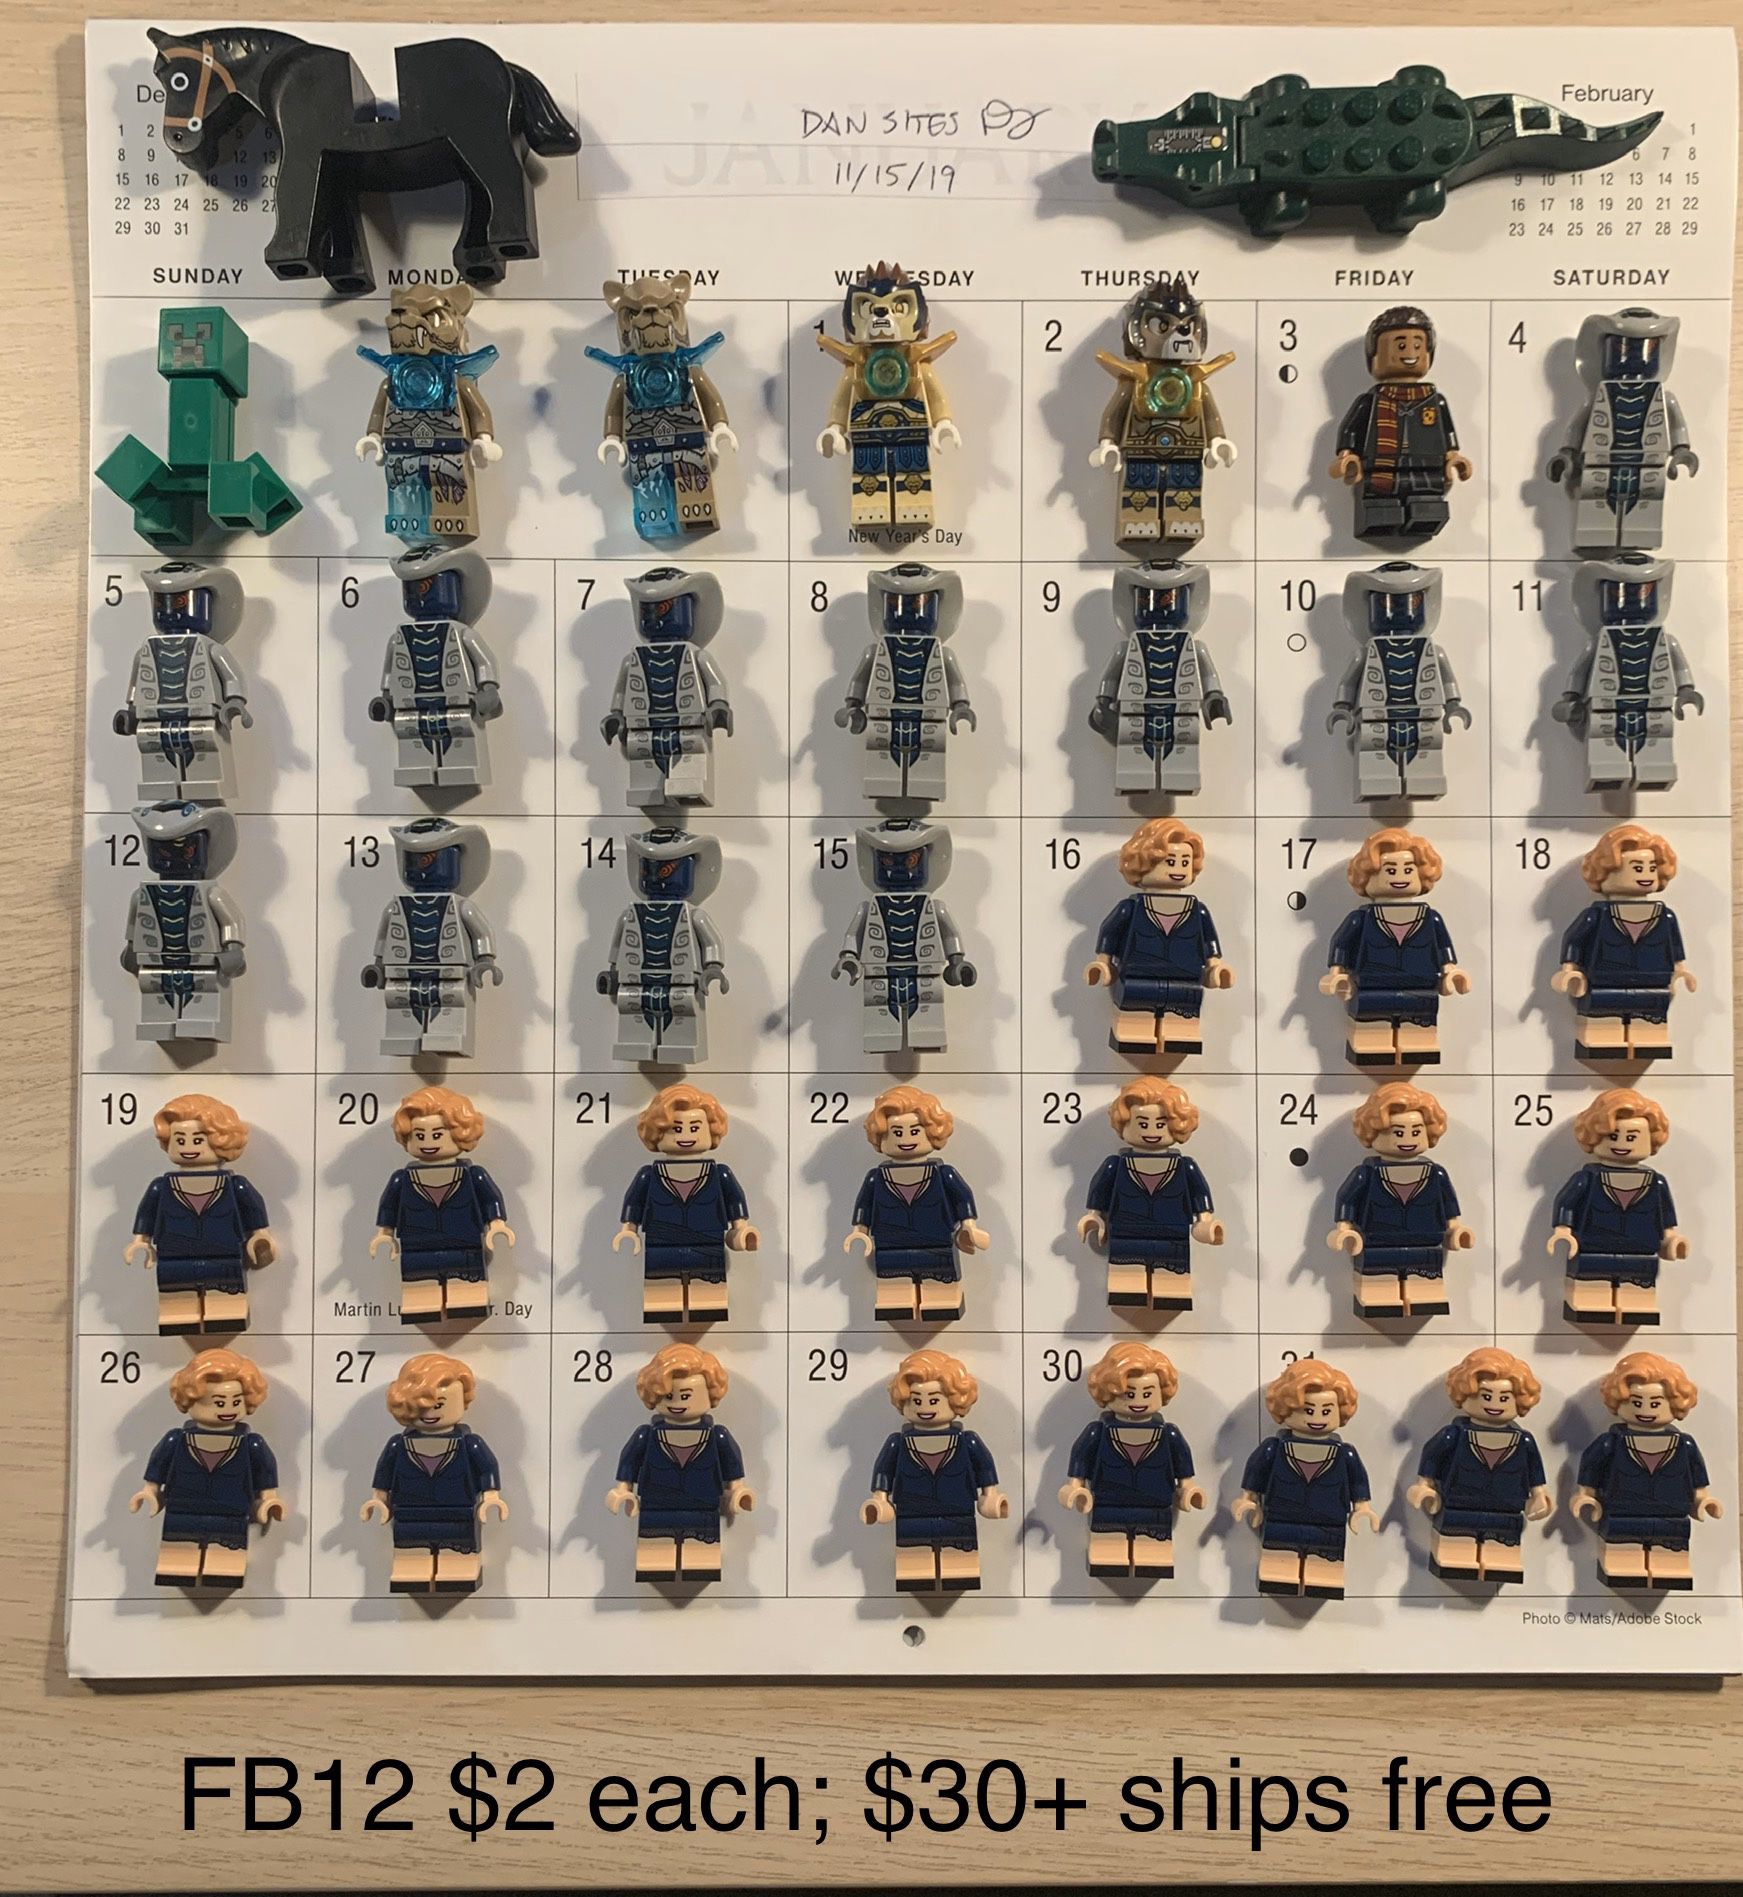 LEGO minifigures! (11/15/19)